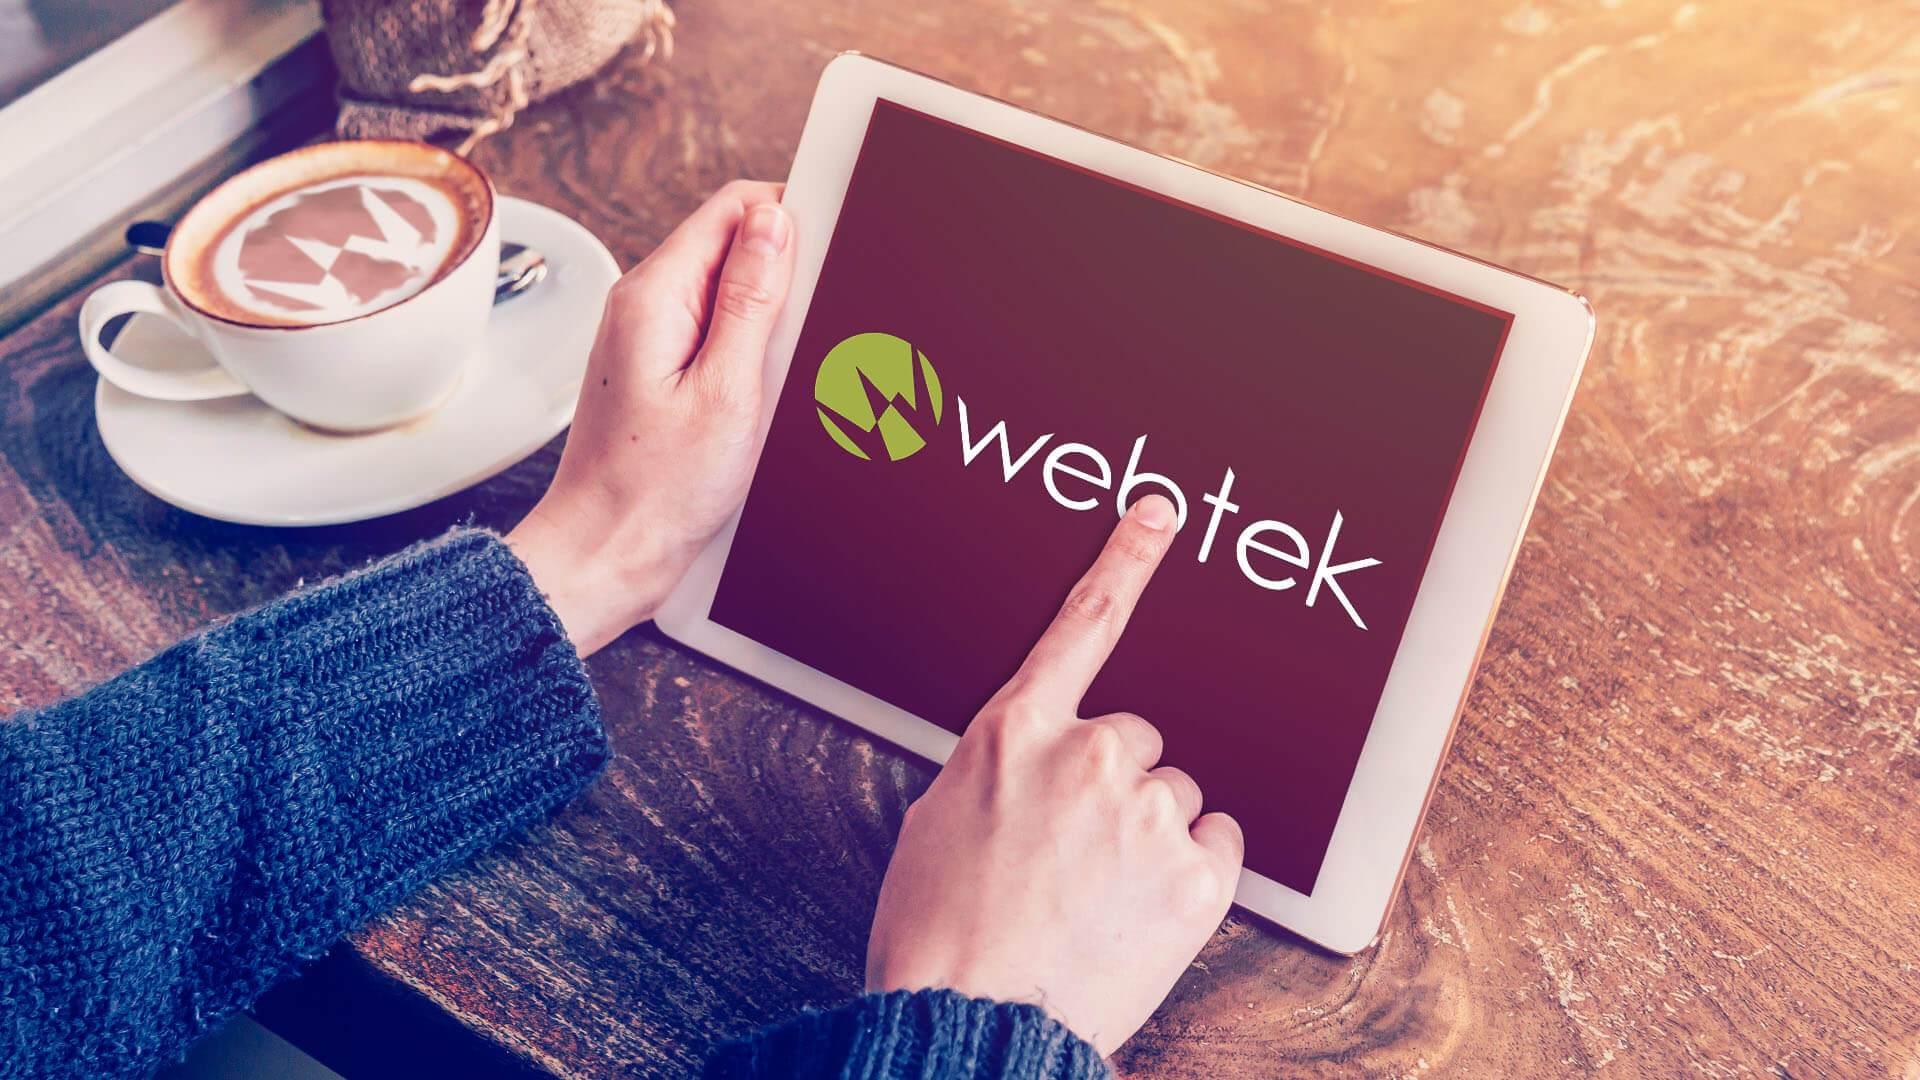 Webtek